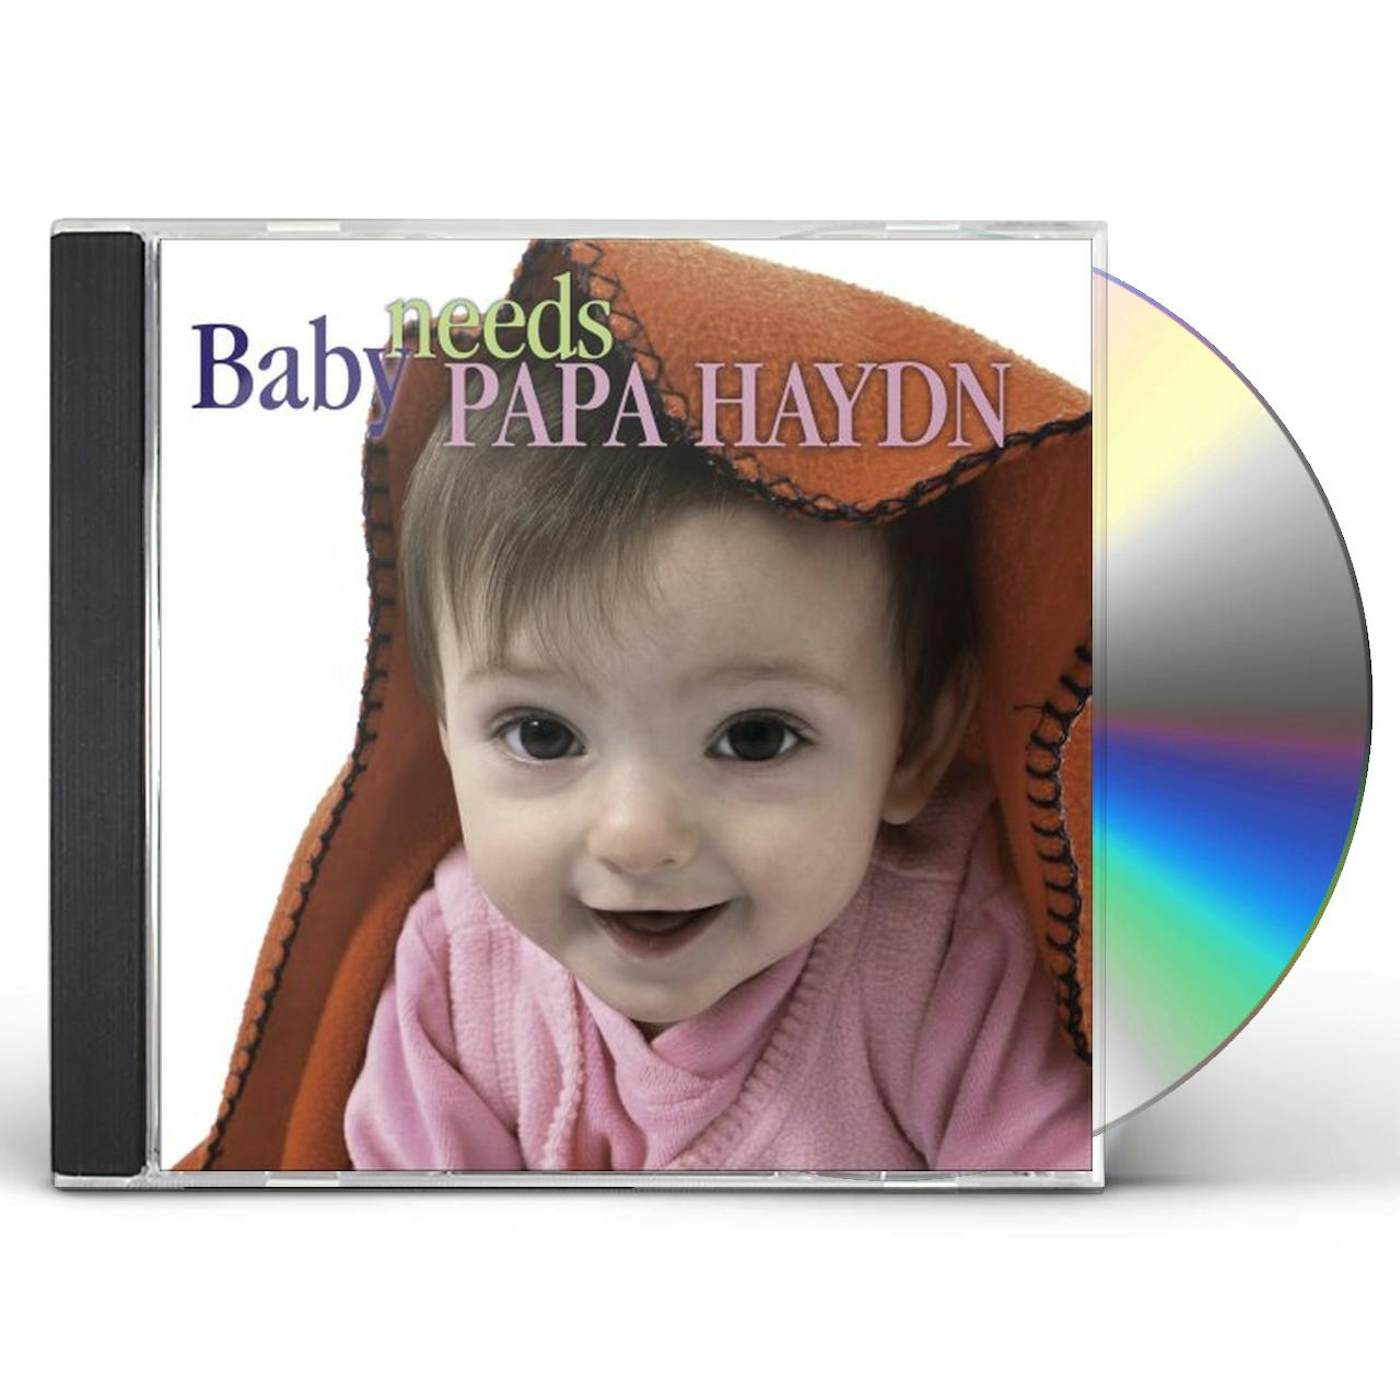 BABY NEEDS PAPA HAYDN CD